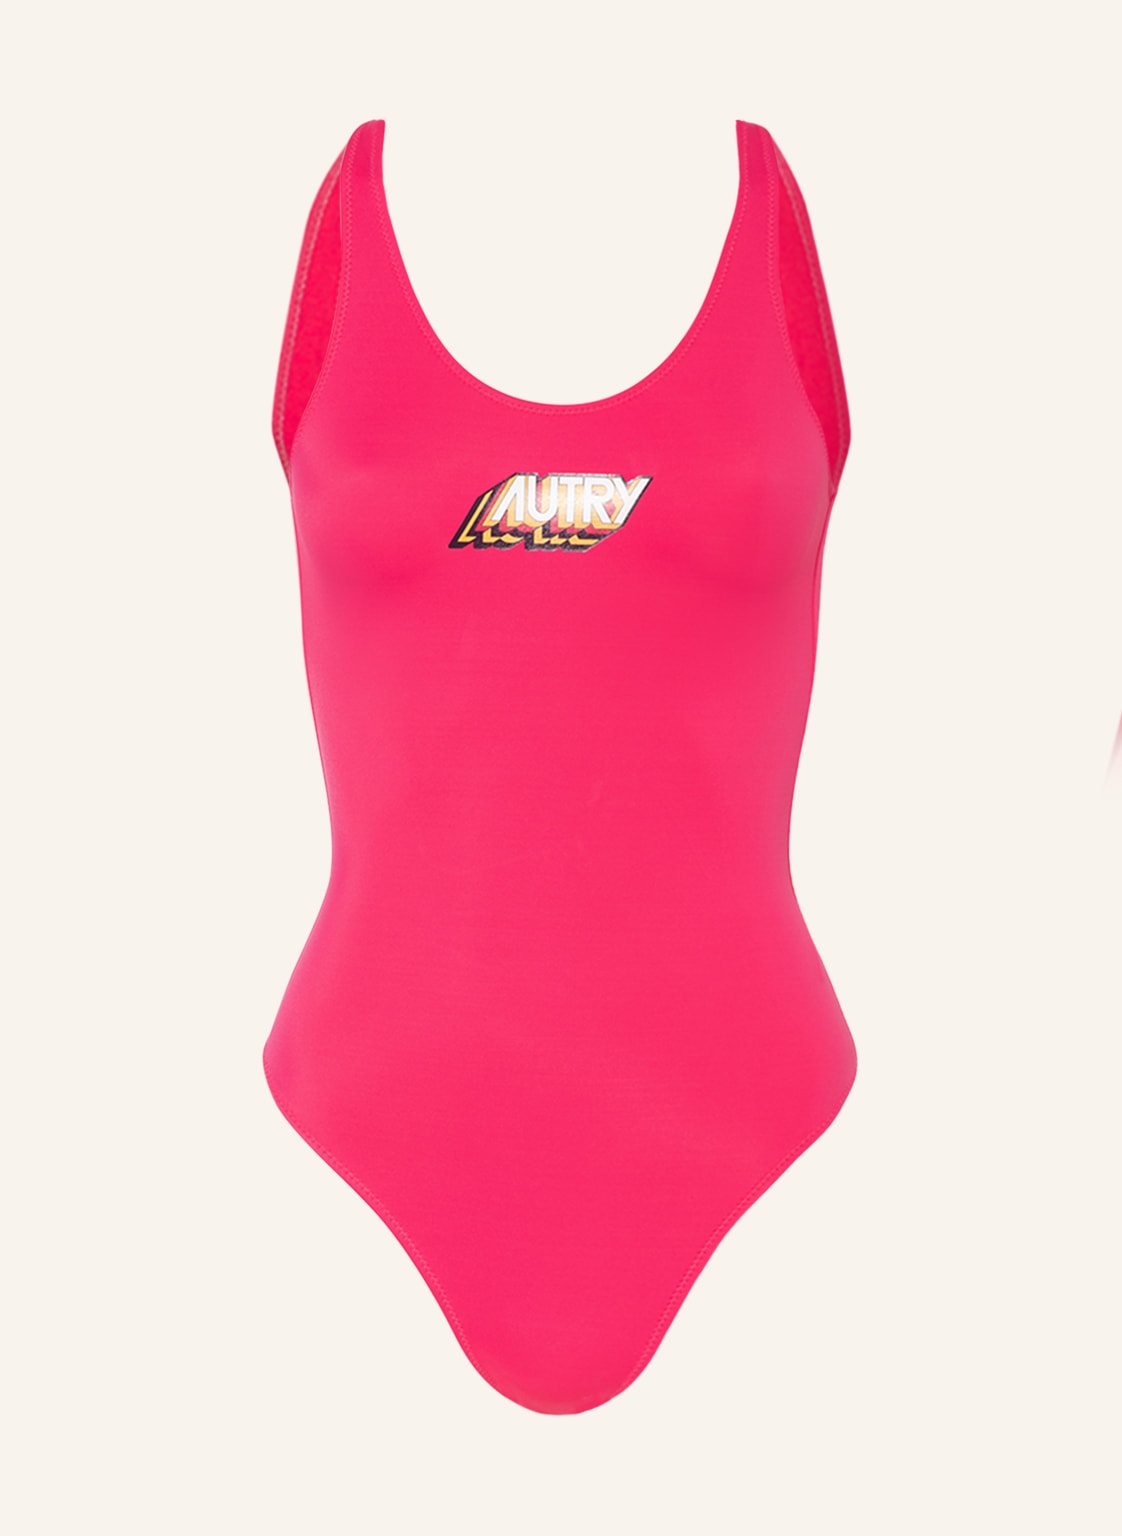 Image of Autry Badeanzug Aerobic Wom pink